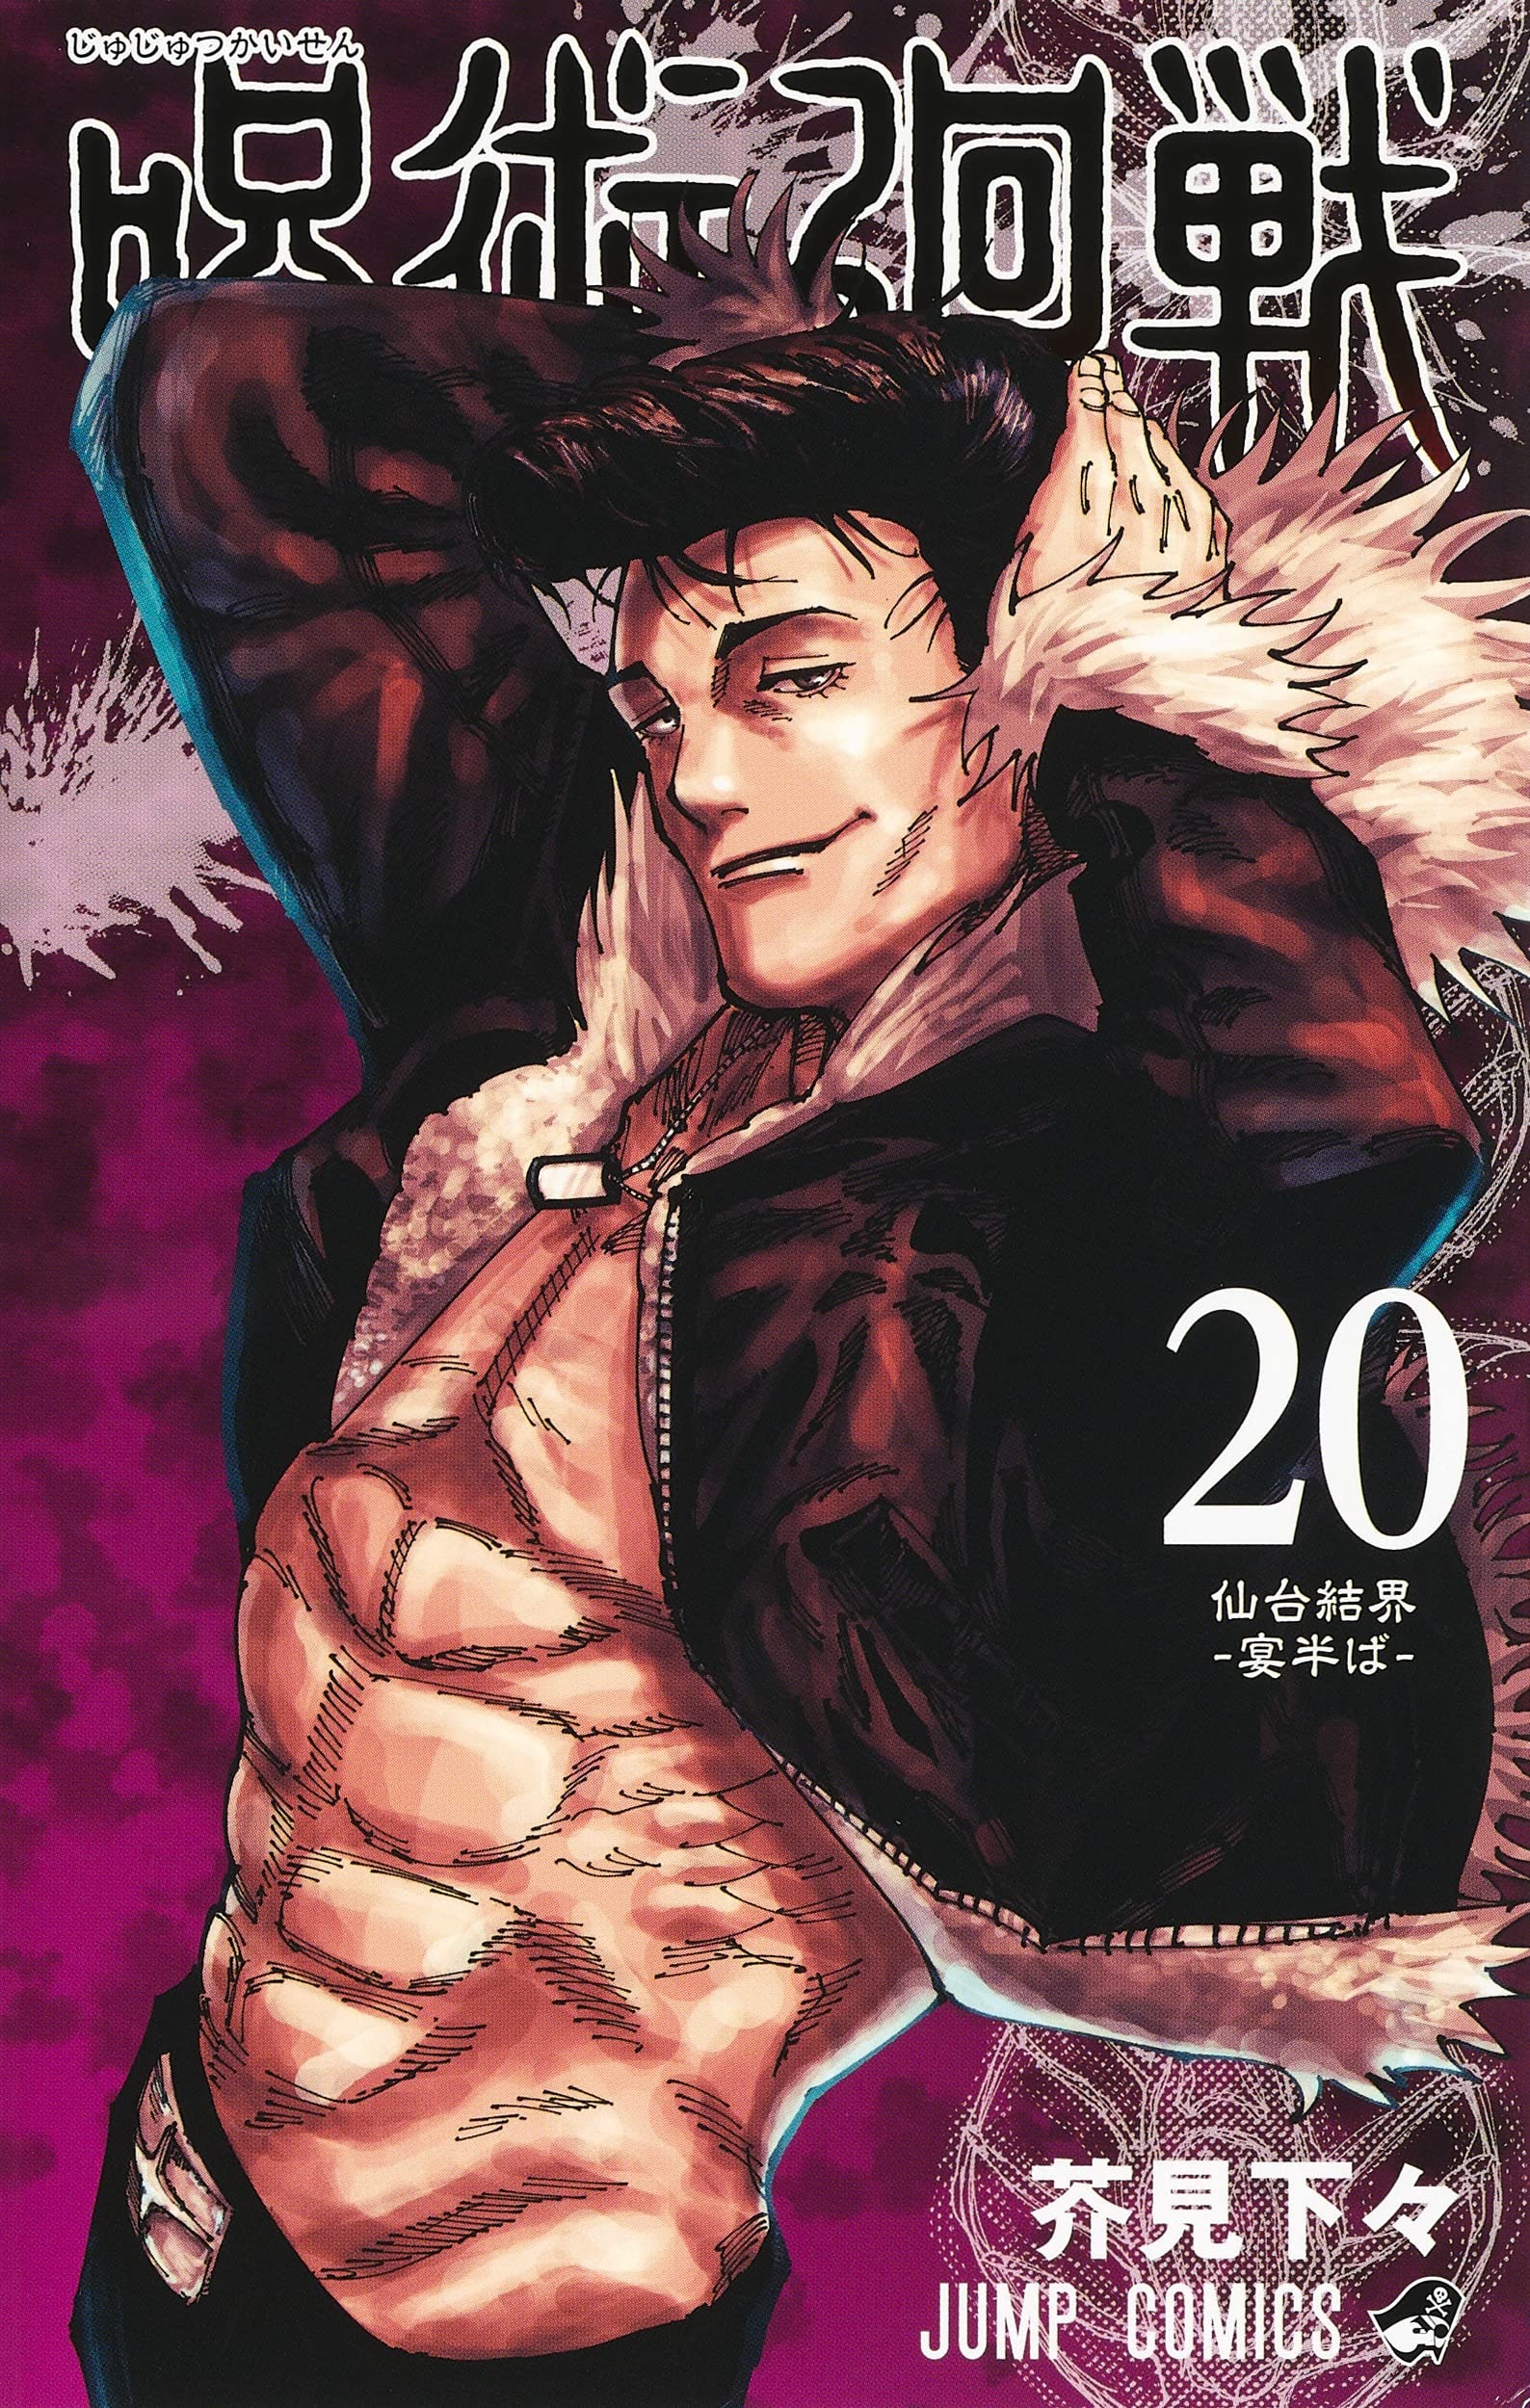 Jujutsu Kaisen Anime Poster at Rs 20/piece